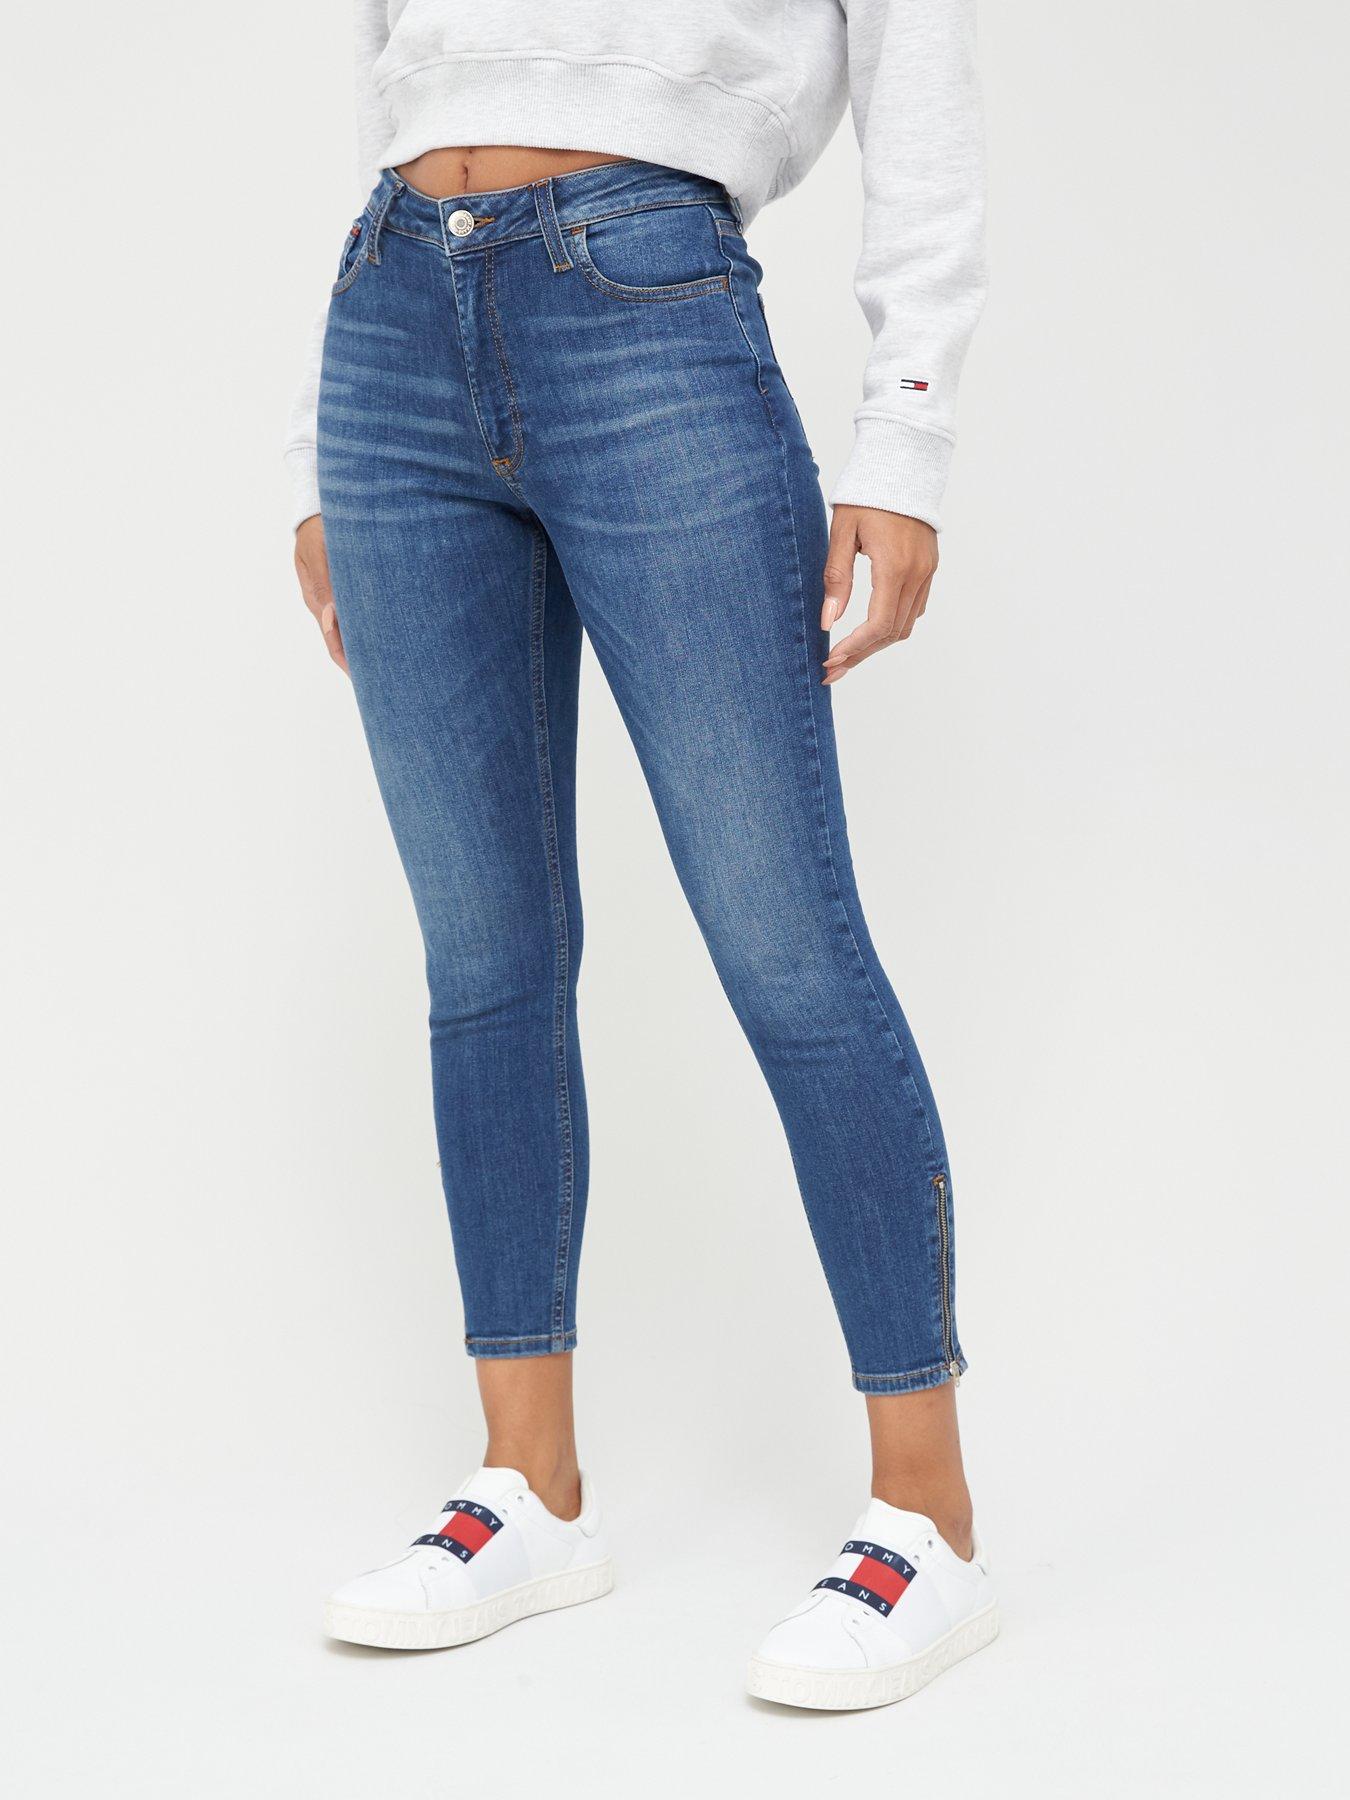 hilfiger womens jeans